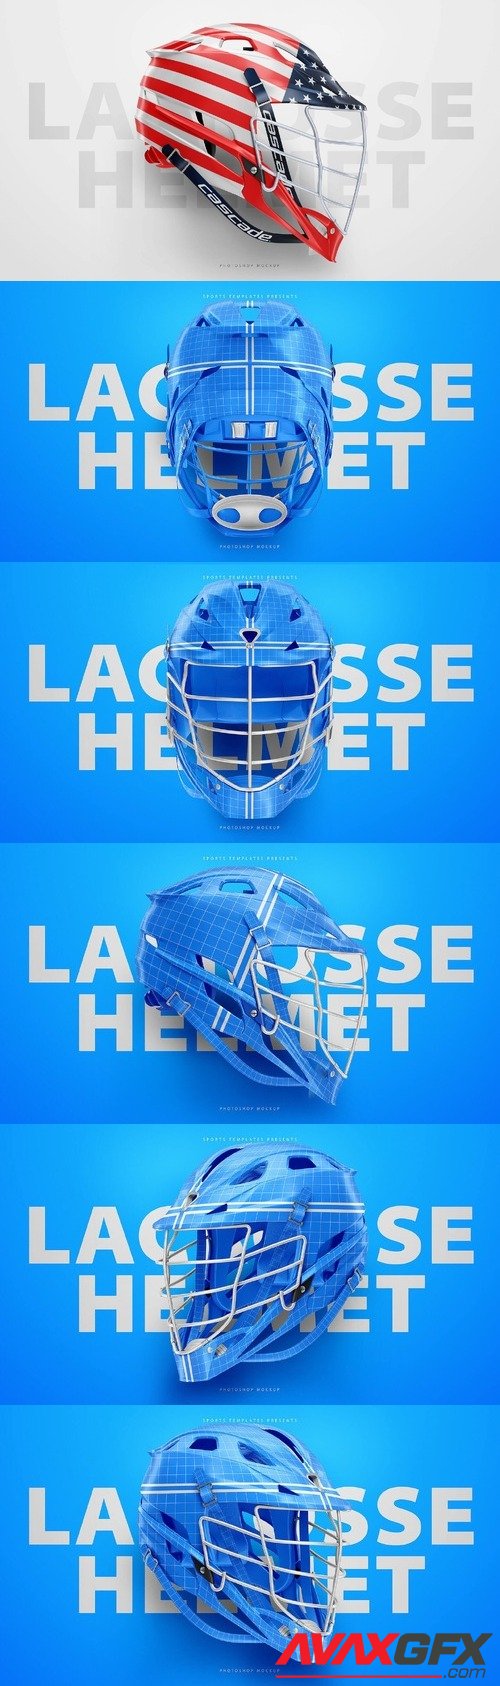 Lacrosse Helmet Mockup Template